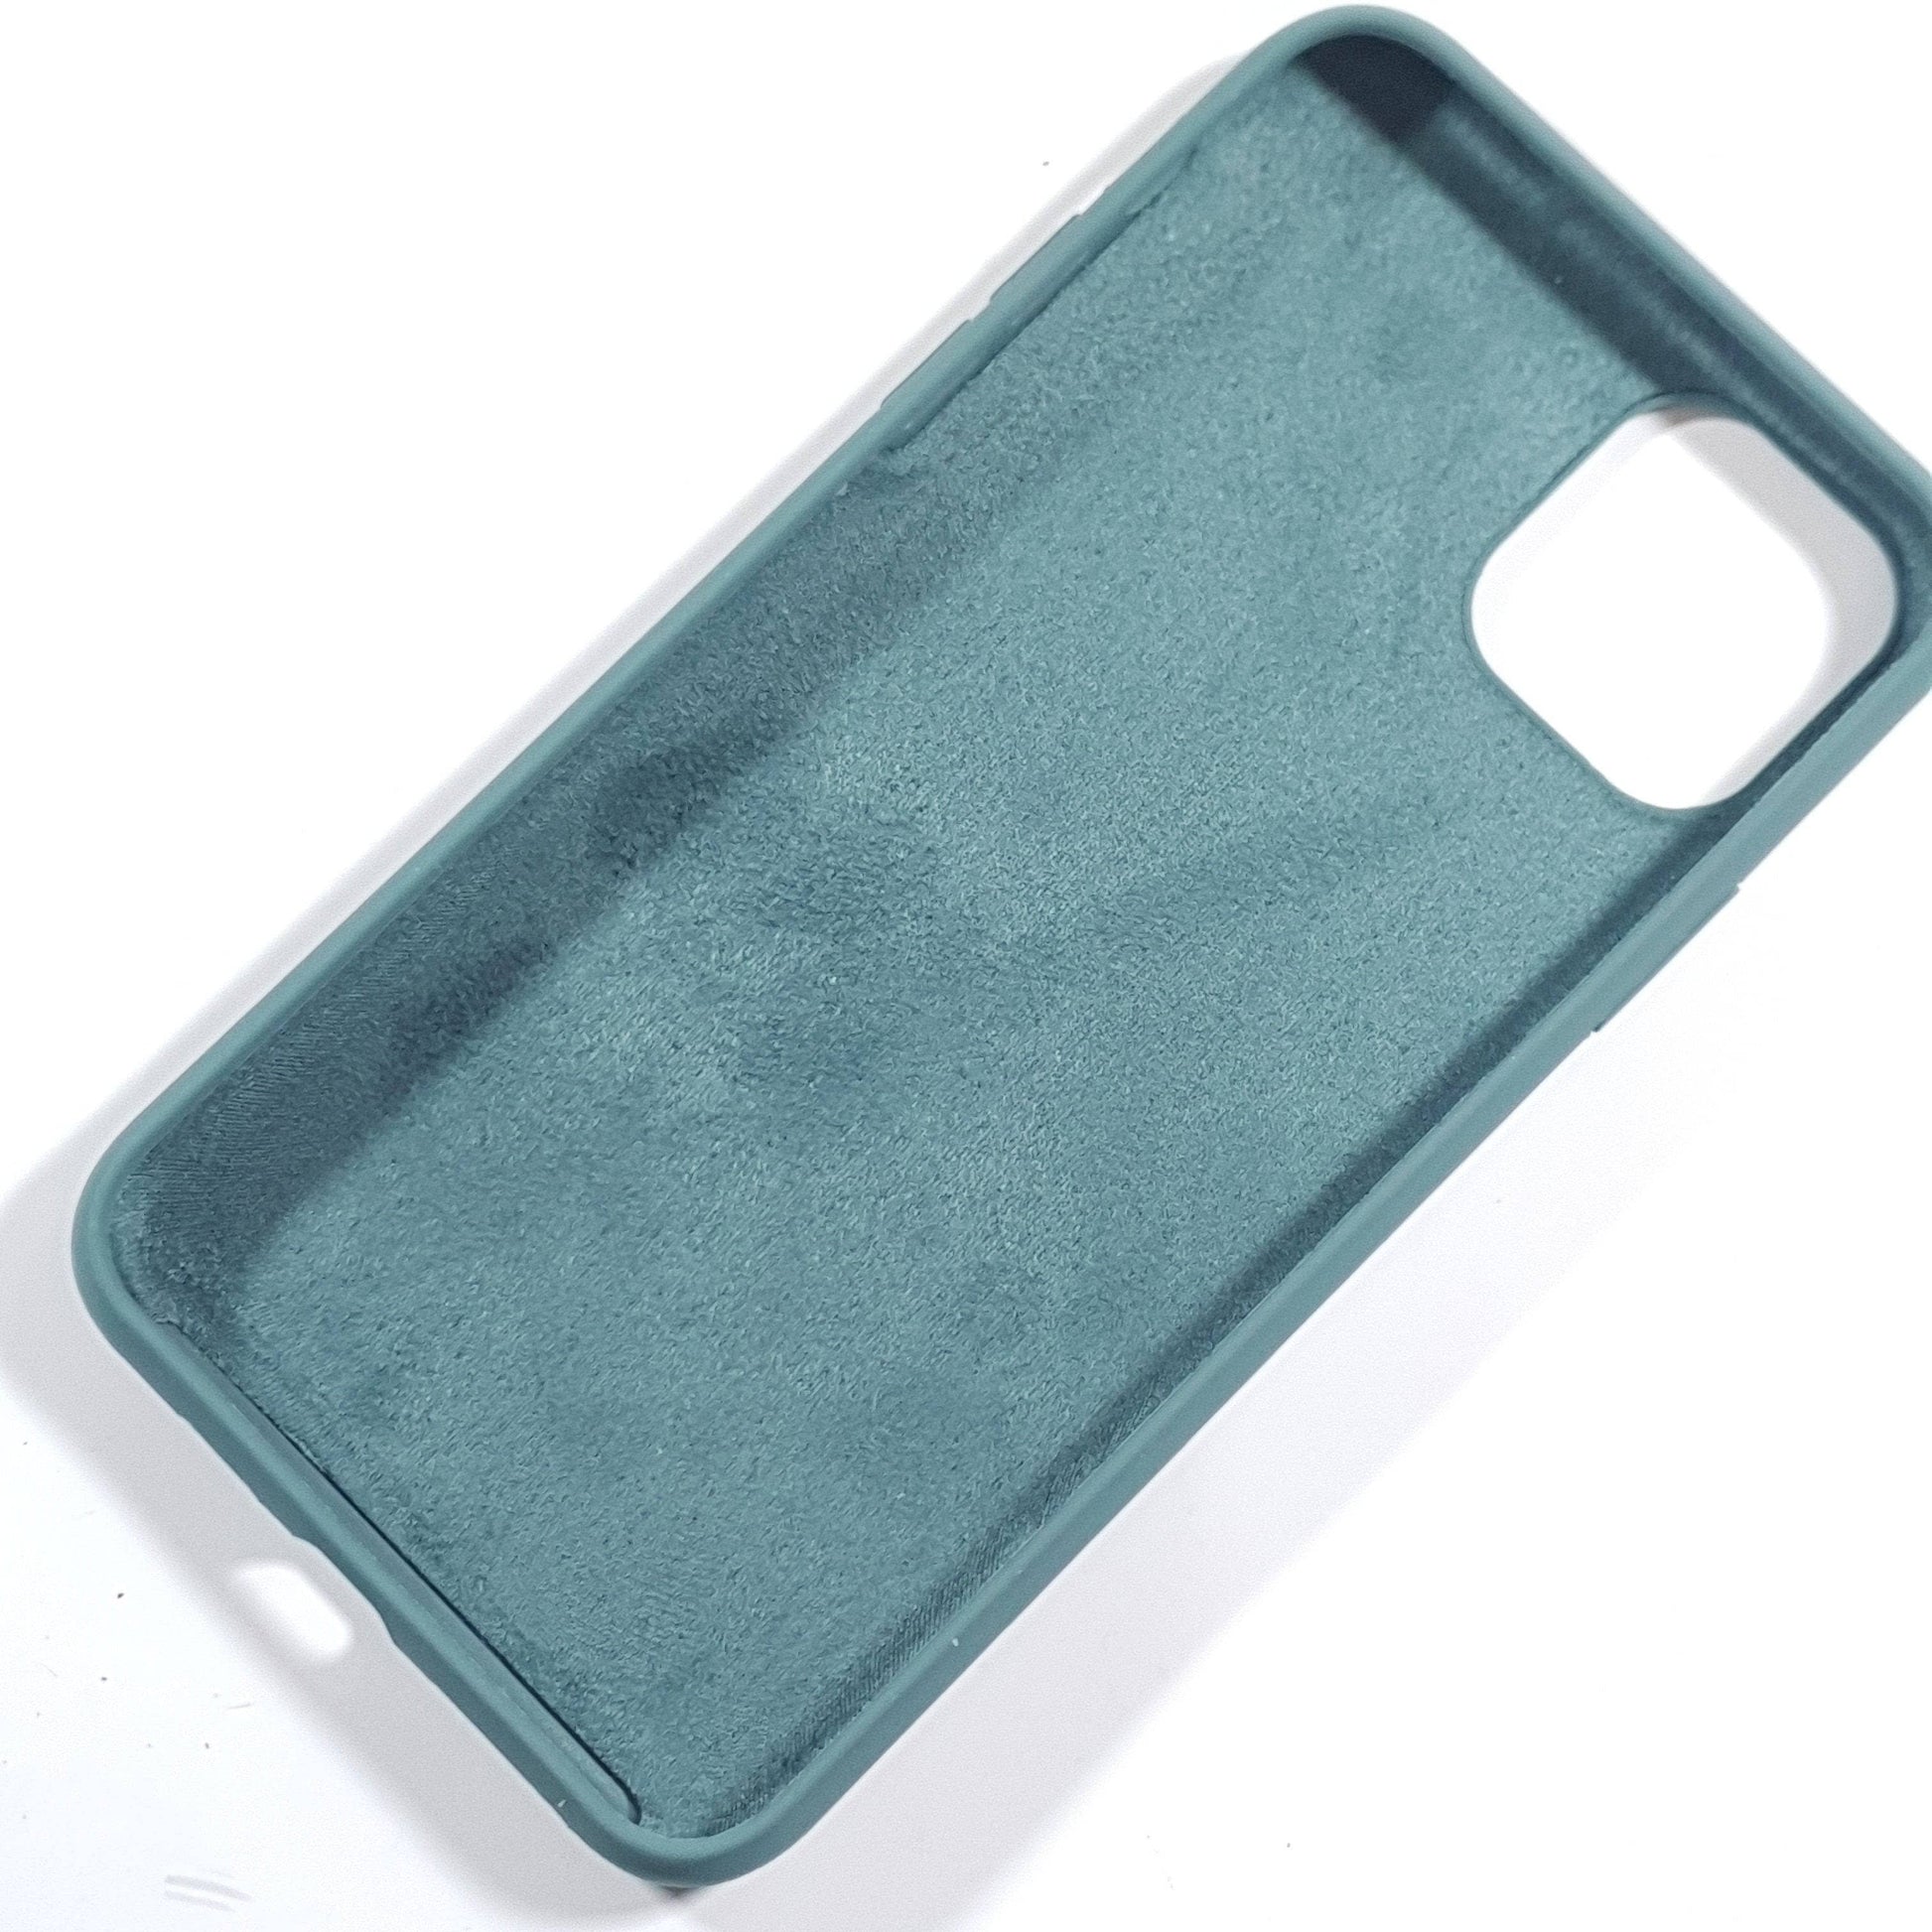 Matt Liquid SIicon Case For iPhone 11 Pro Max Soft Touch Back Skin Rubber-Phone Case-Generic-www.PhoneGuy.com.au